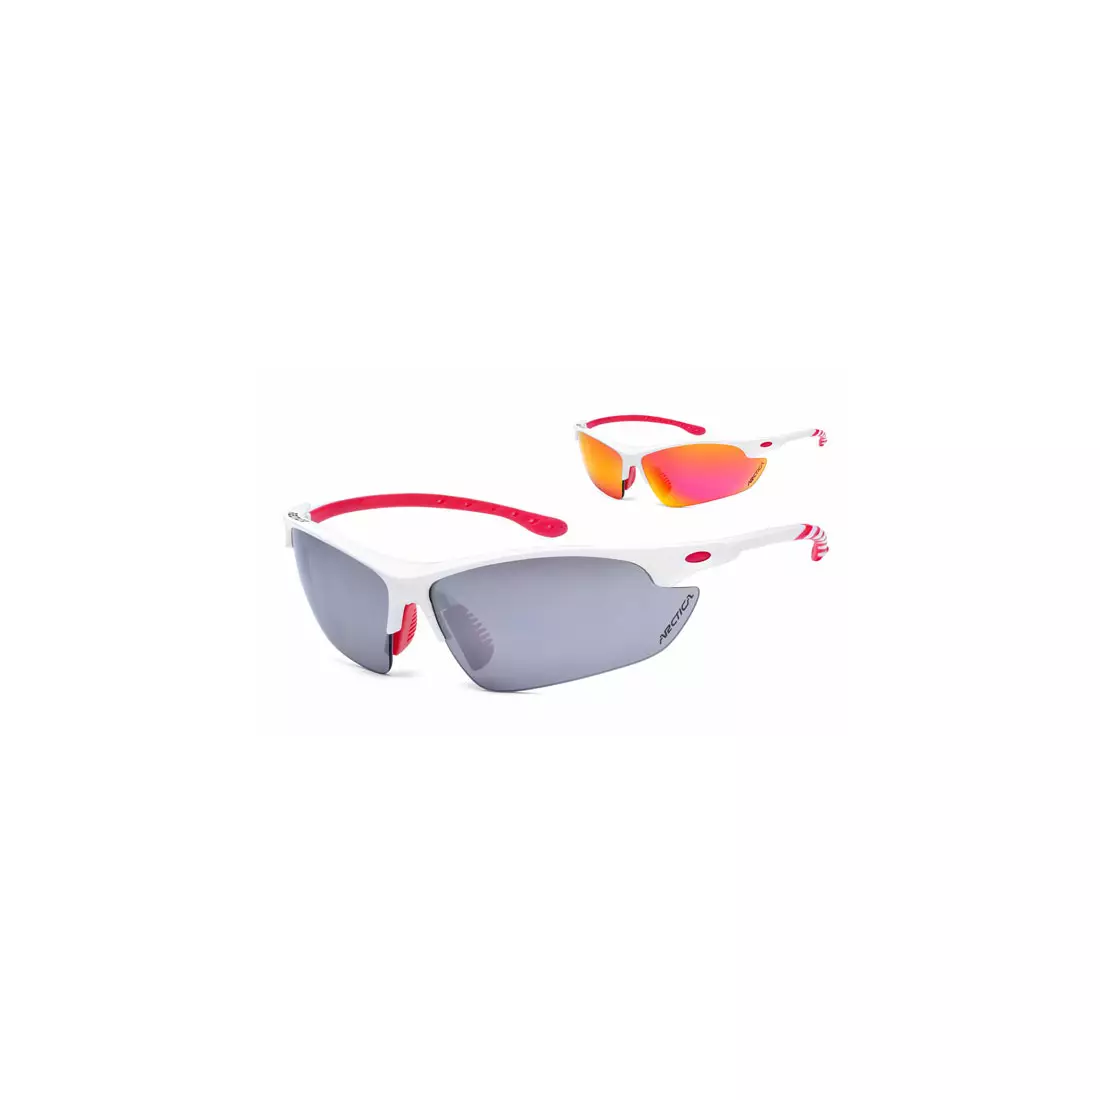 ARCTICA cycling/sports glasses, S 199B